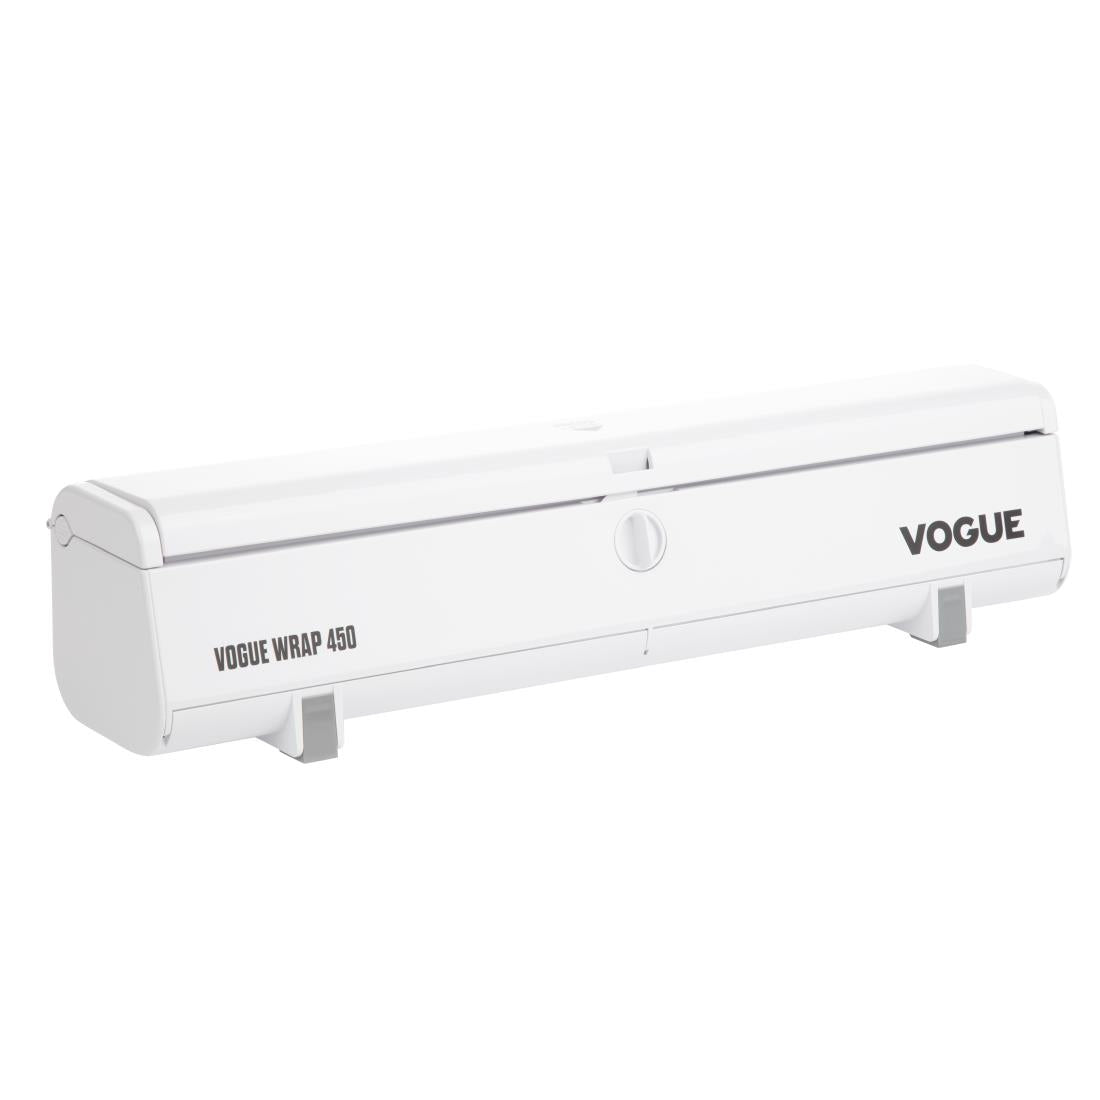 SA777 Vogue Wrap 450 Cling Film Dispenser Bundle